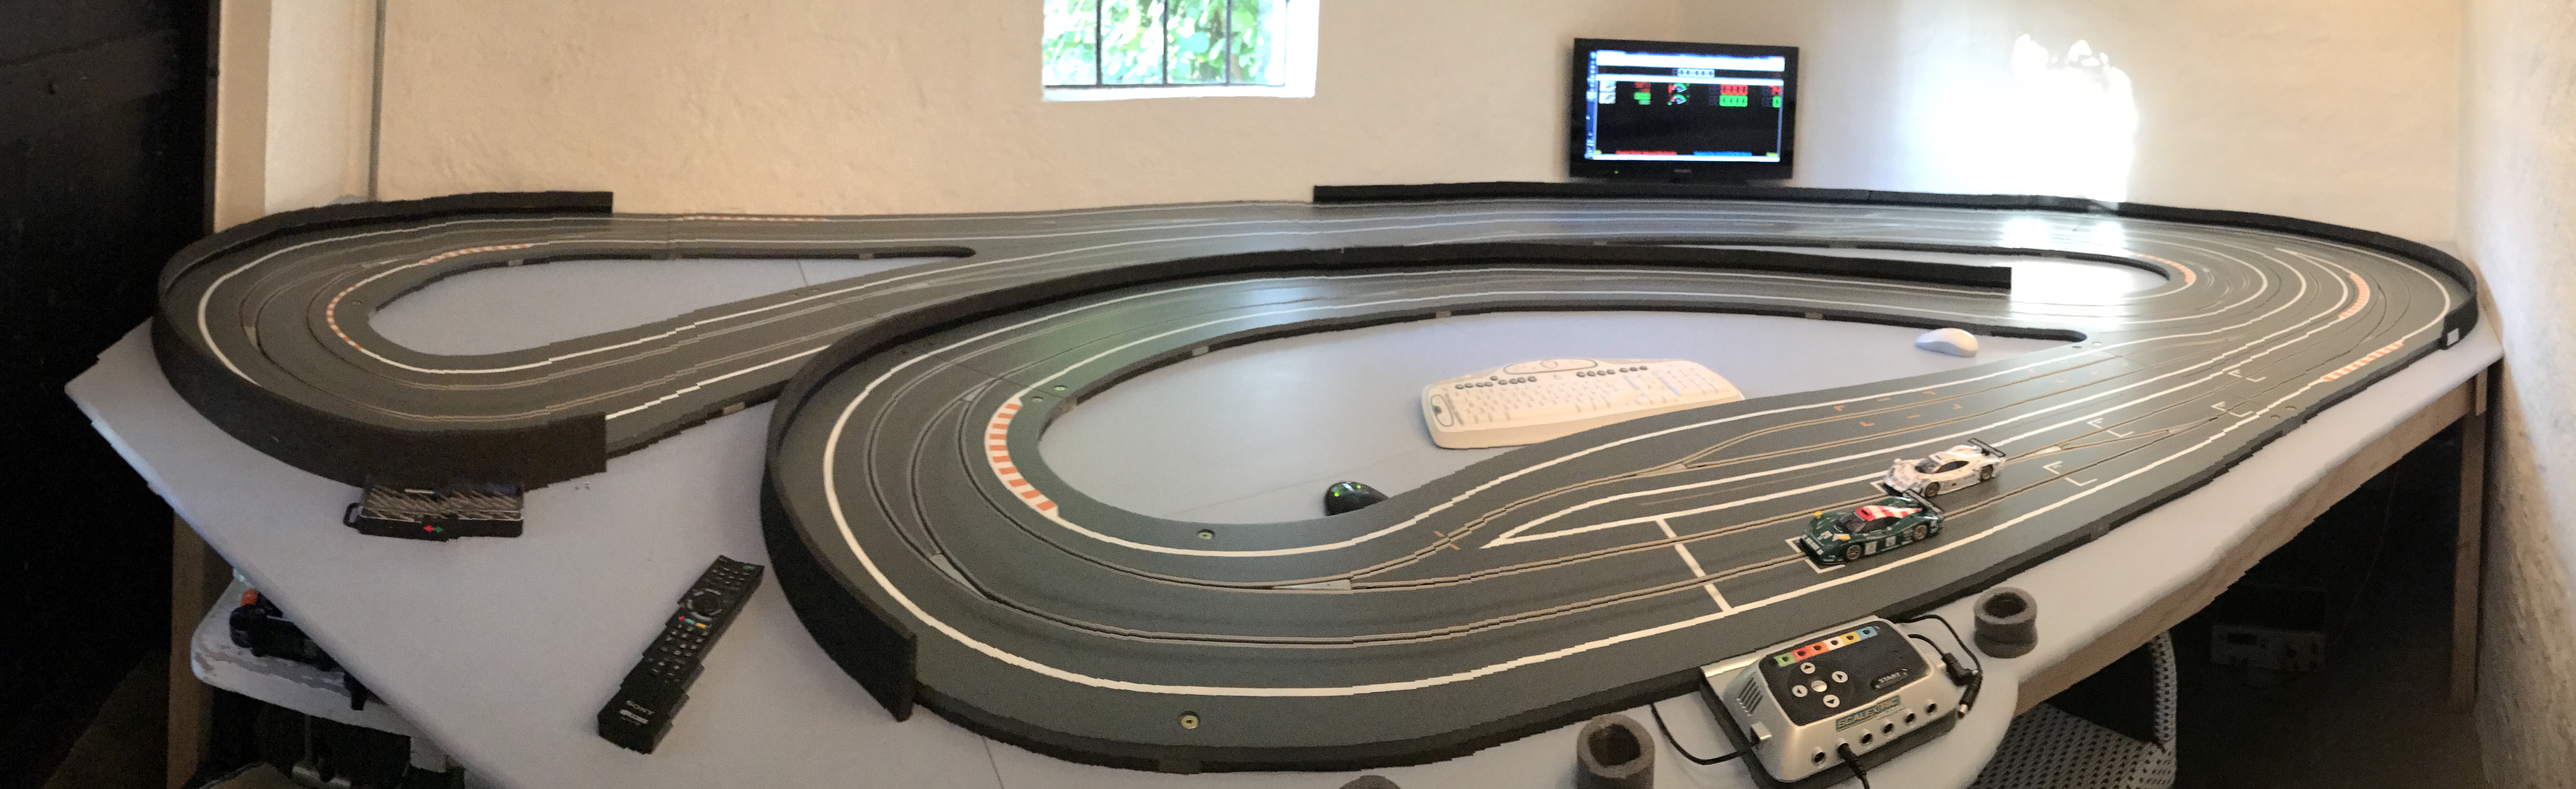 Welcome to 'GT 40 Raceway' - a Digital Wooden Slot Car Track - GT 40 Raceway